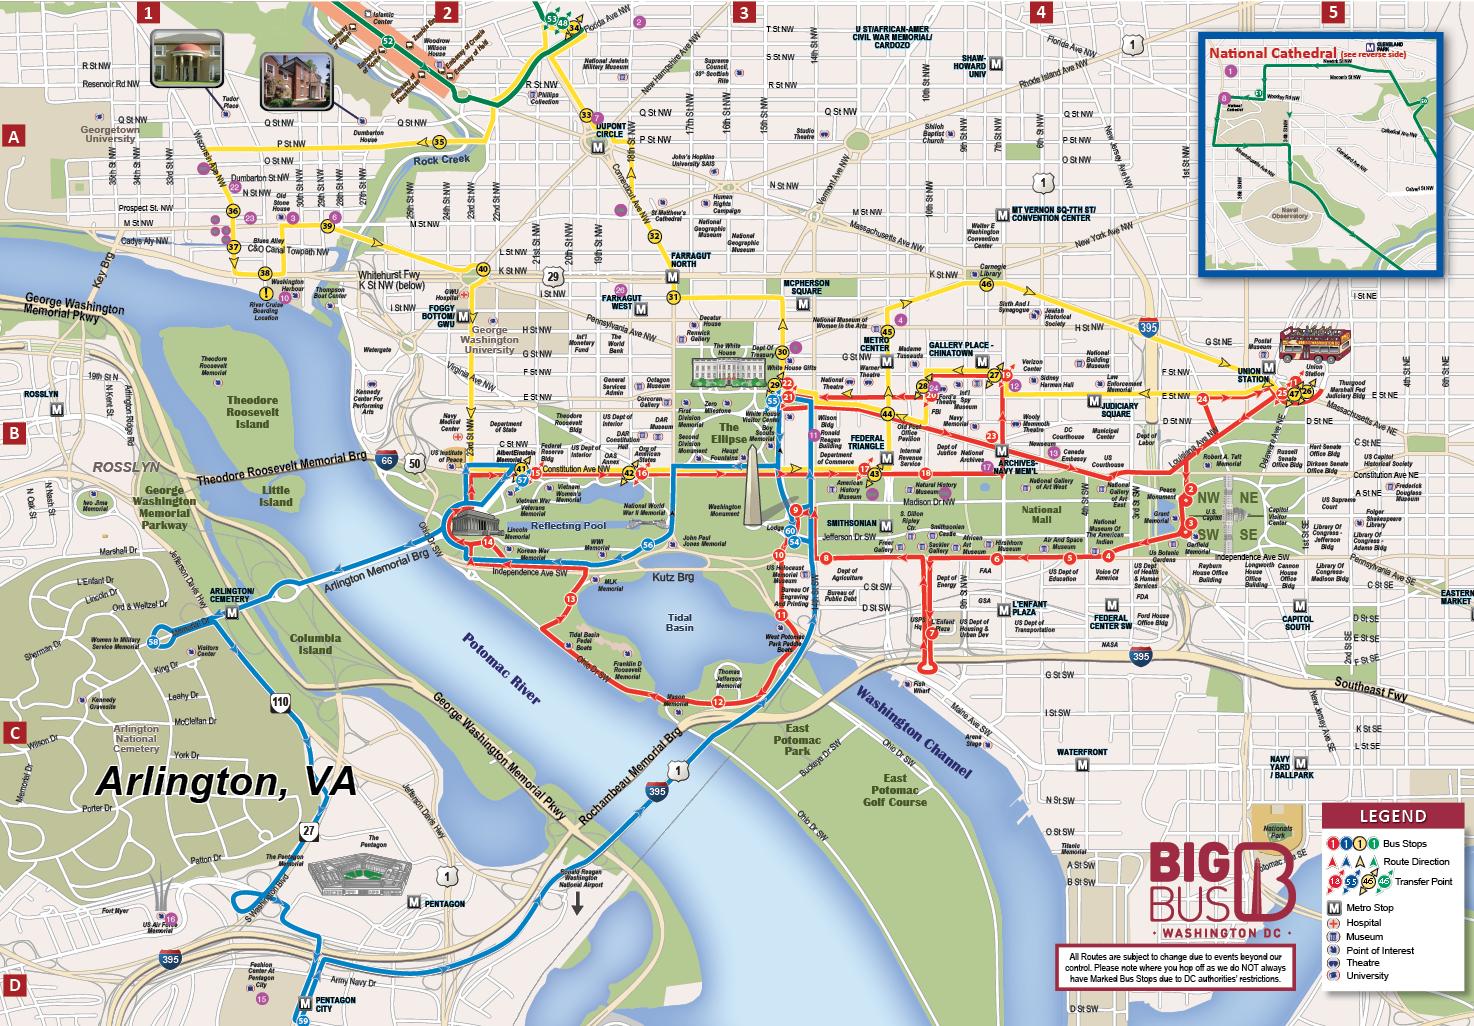 Big bus washington dc map - Big bus dc map (District of Columbia - USA)